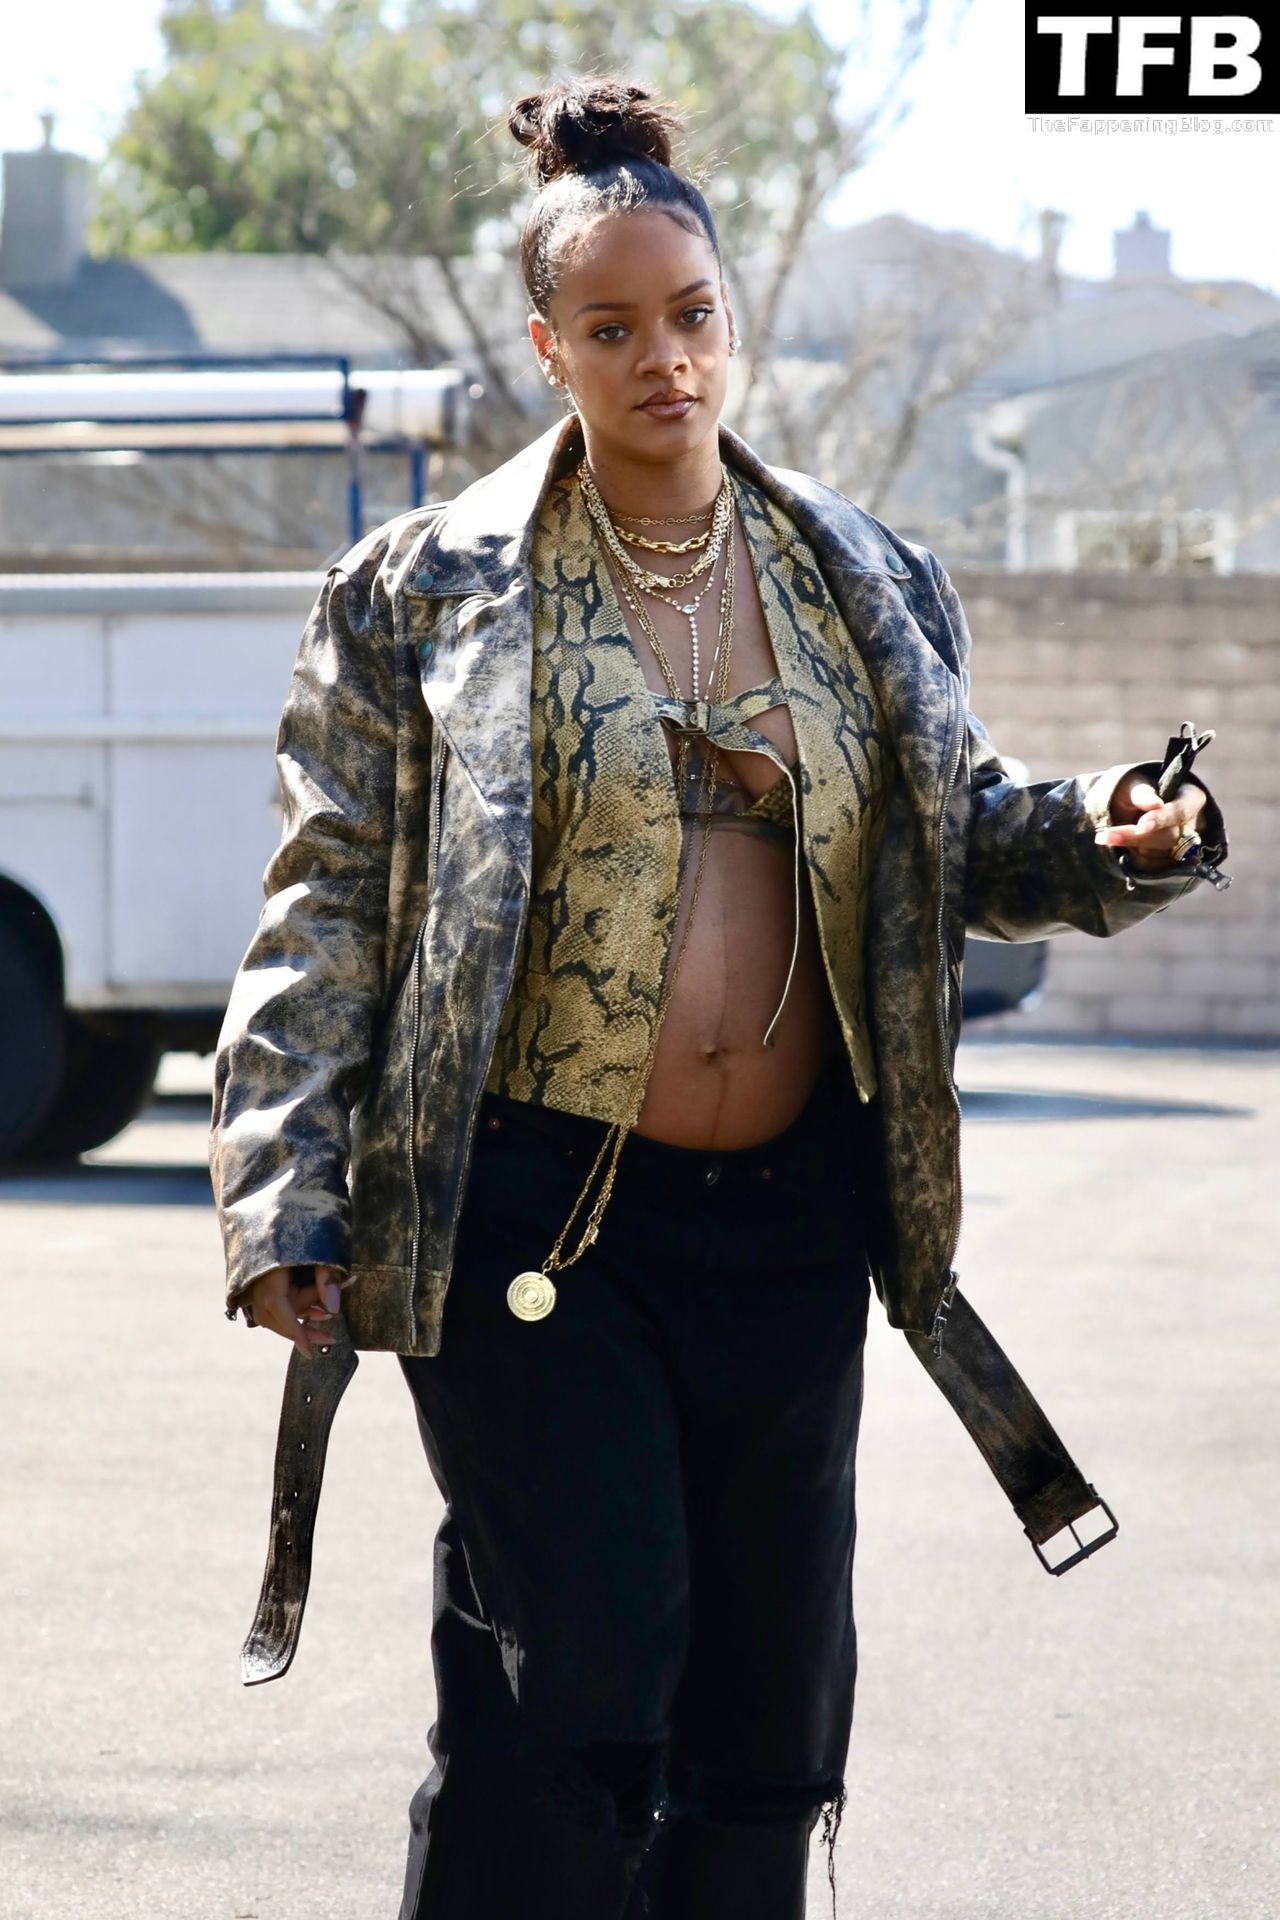 Rihanna-Sexy-The-Fappening-Blog-11-3.jpg